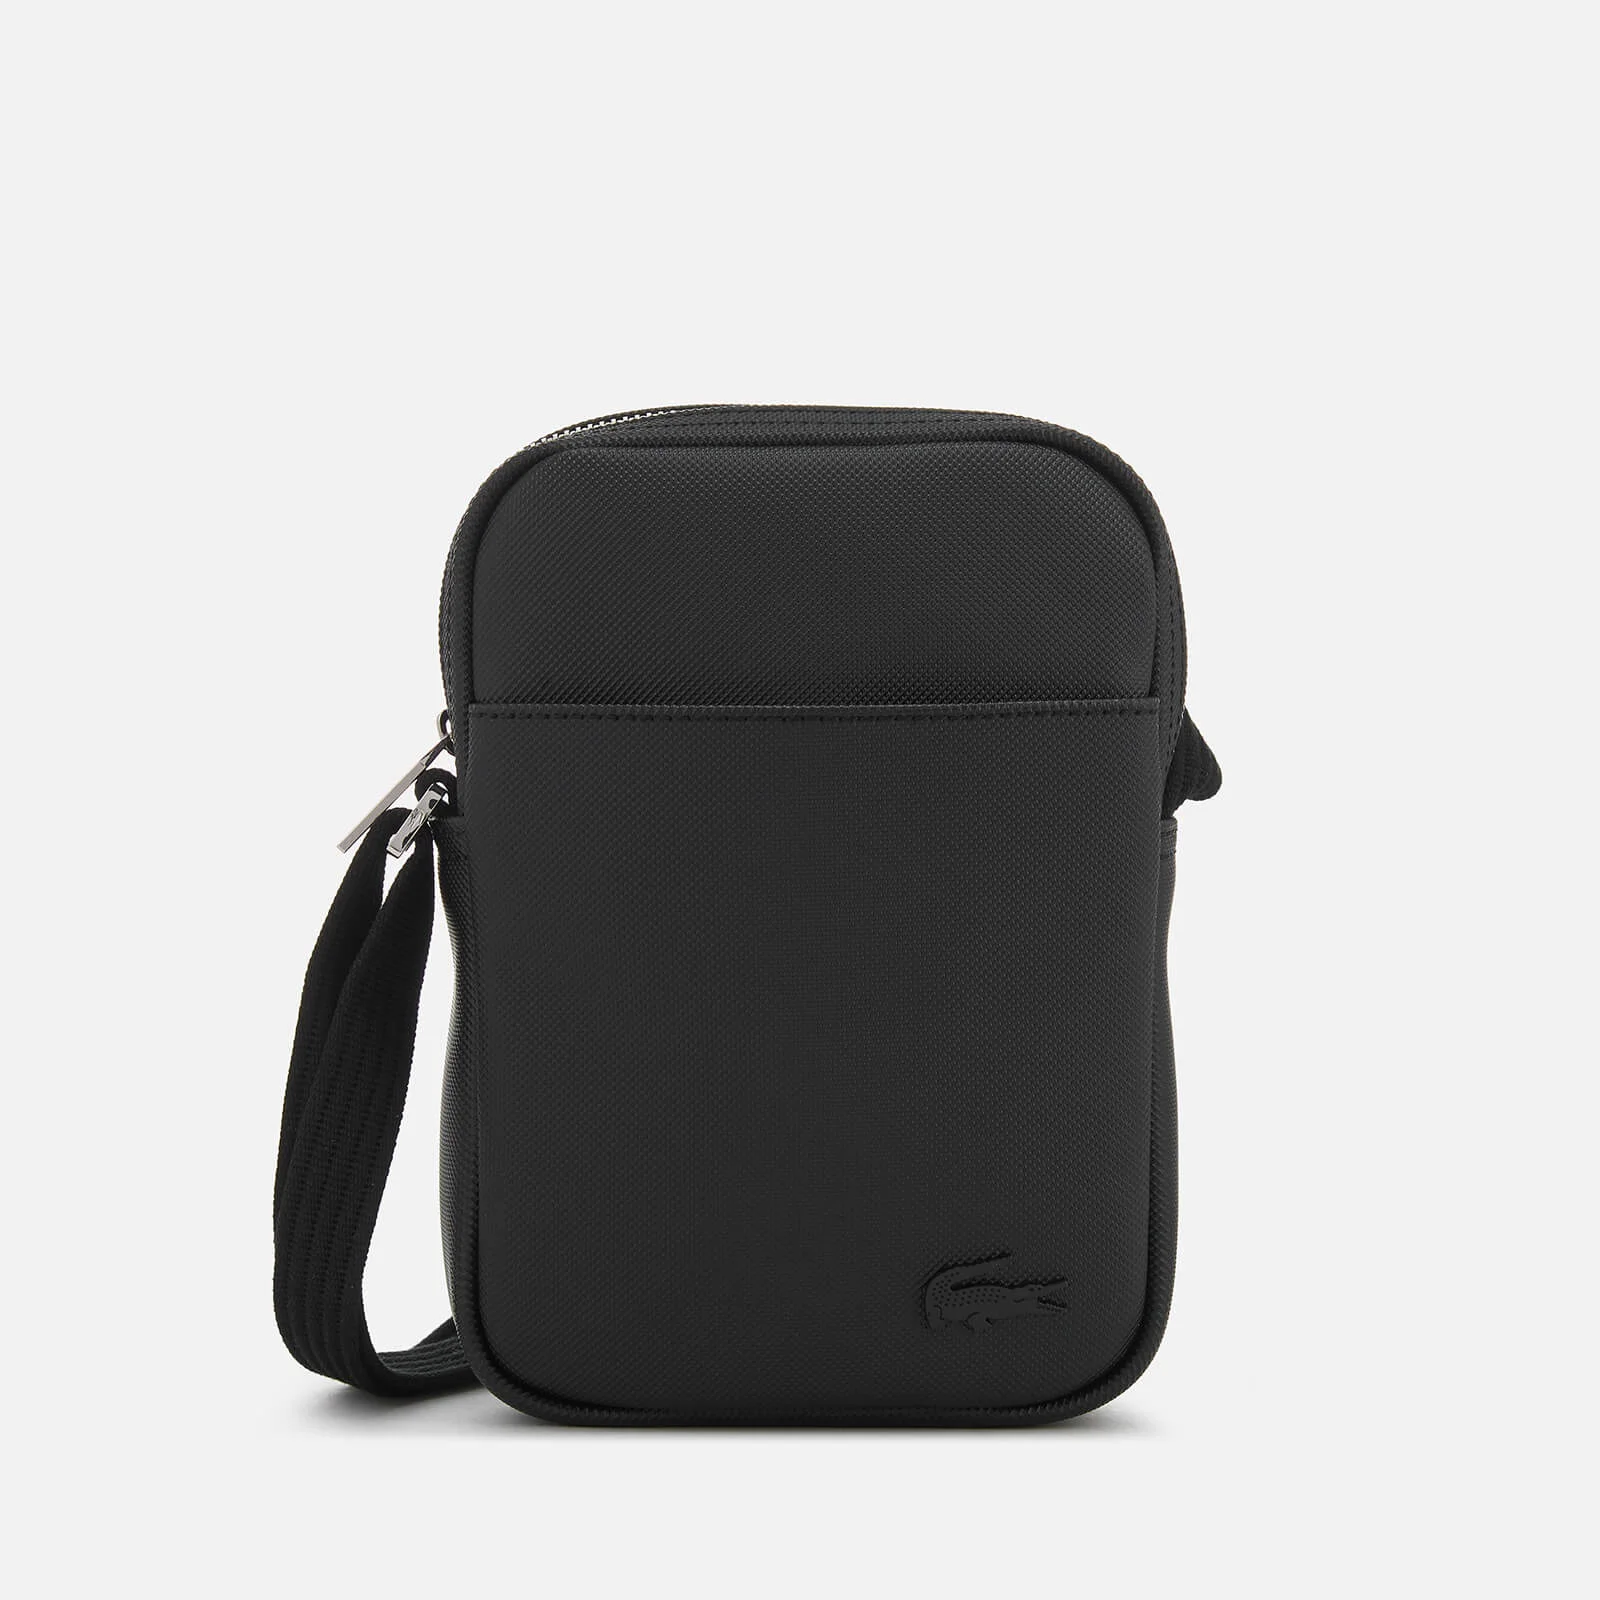 Lacoste Men's Slim Vertical Camera Bag - Black Image 1